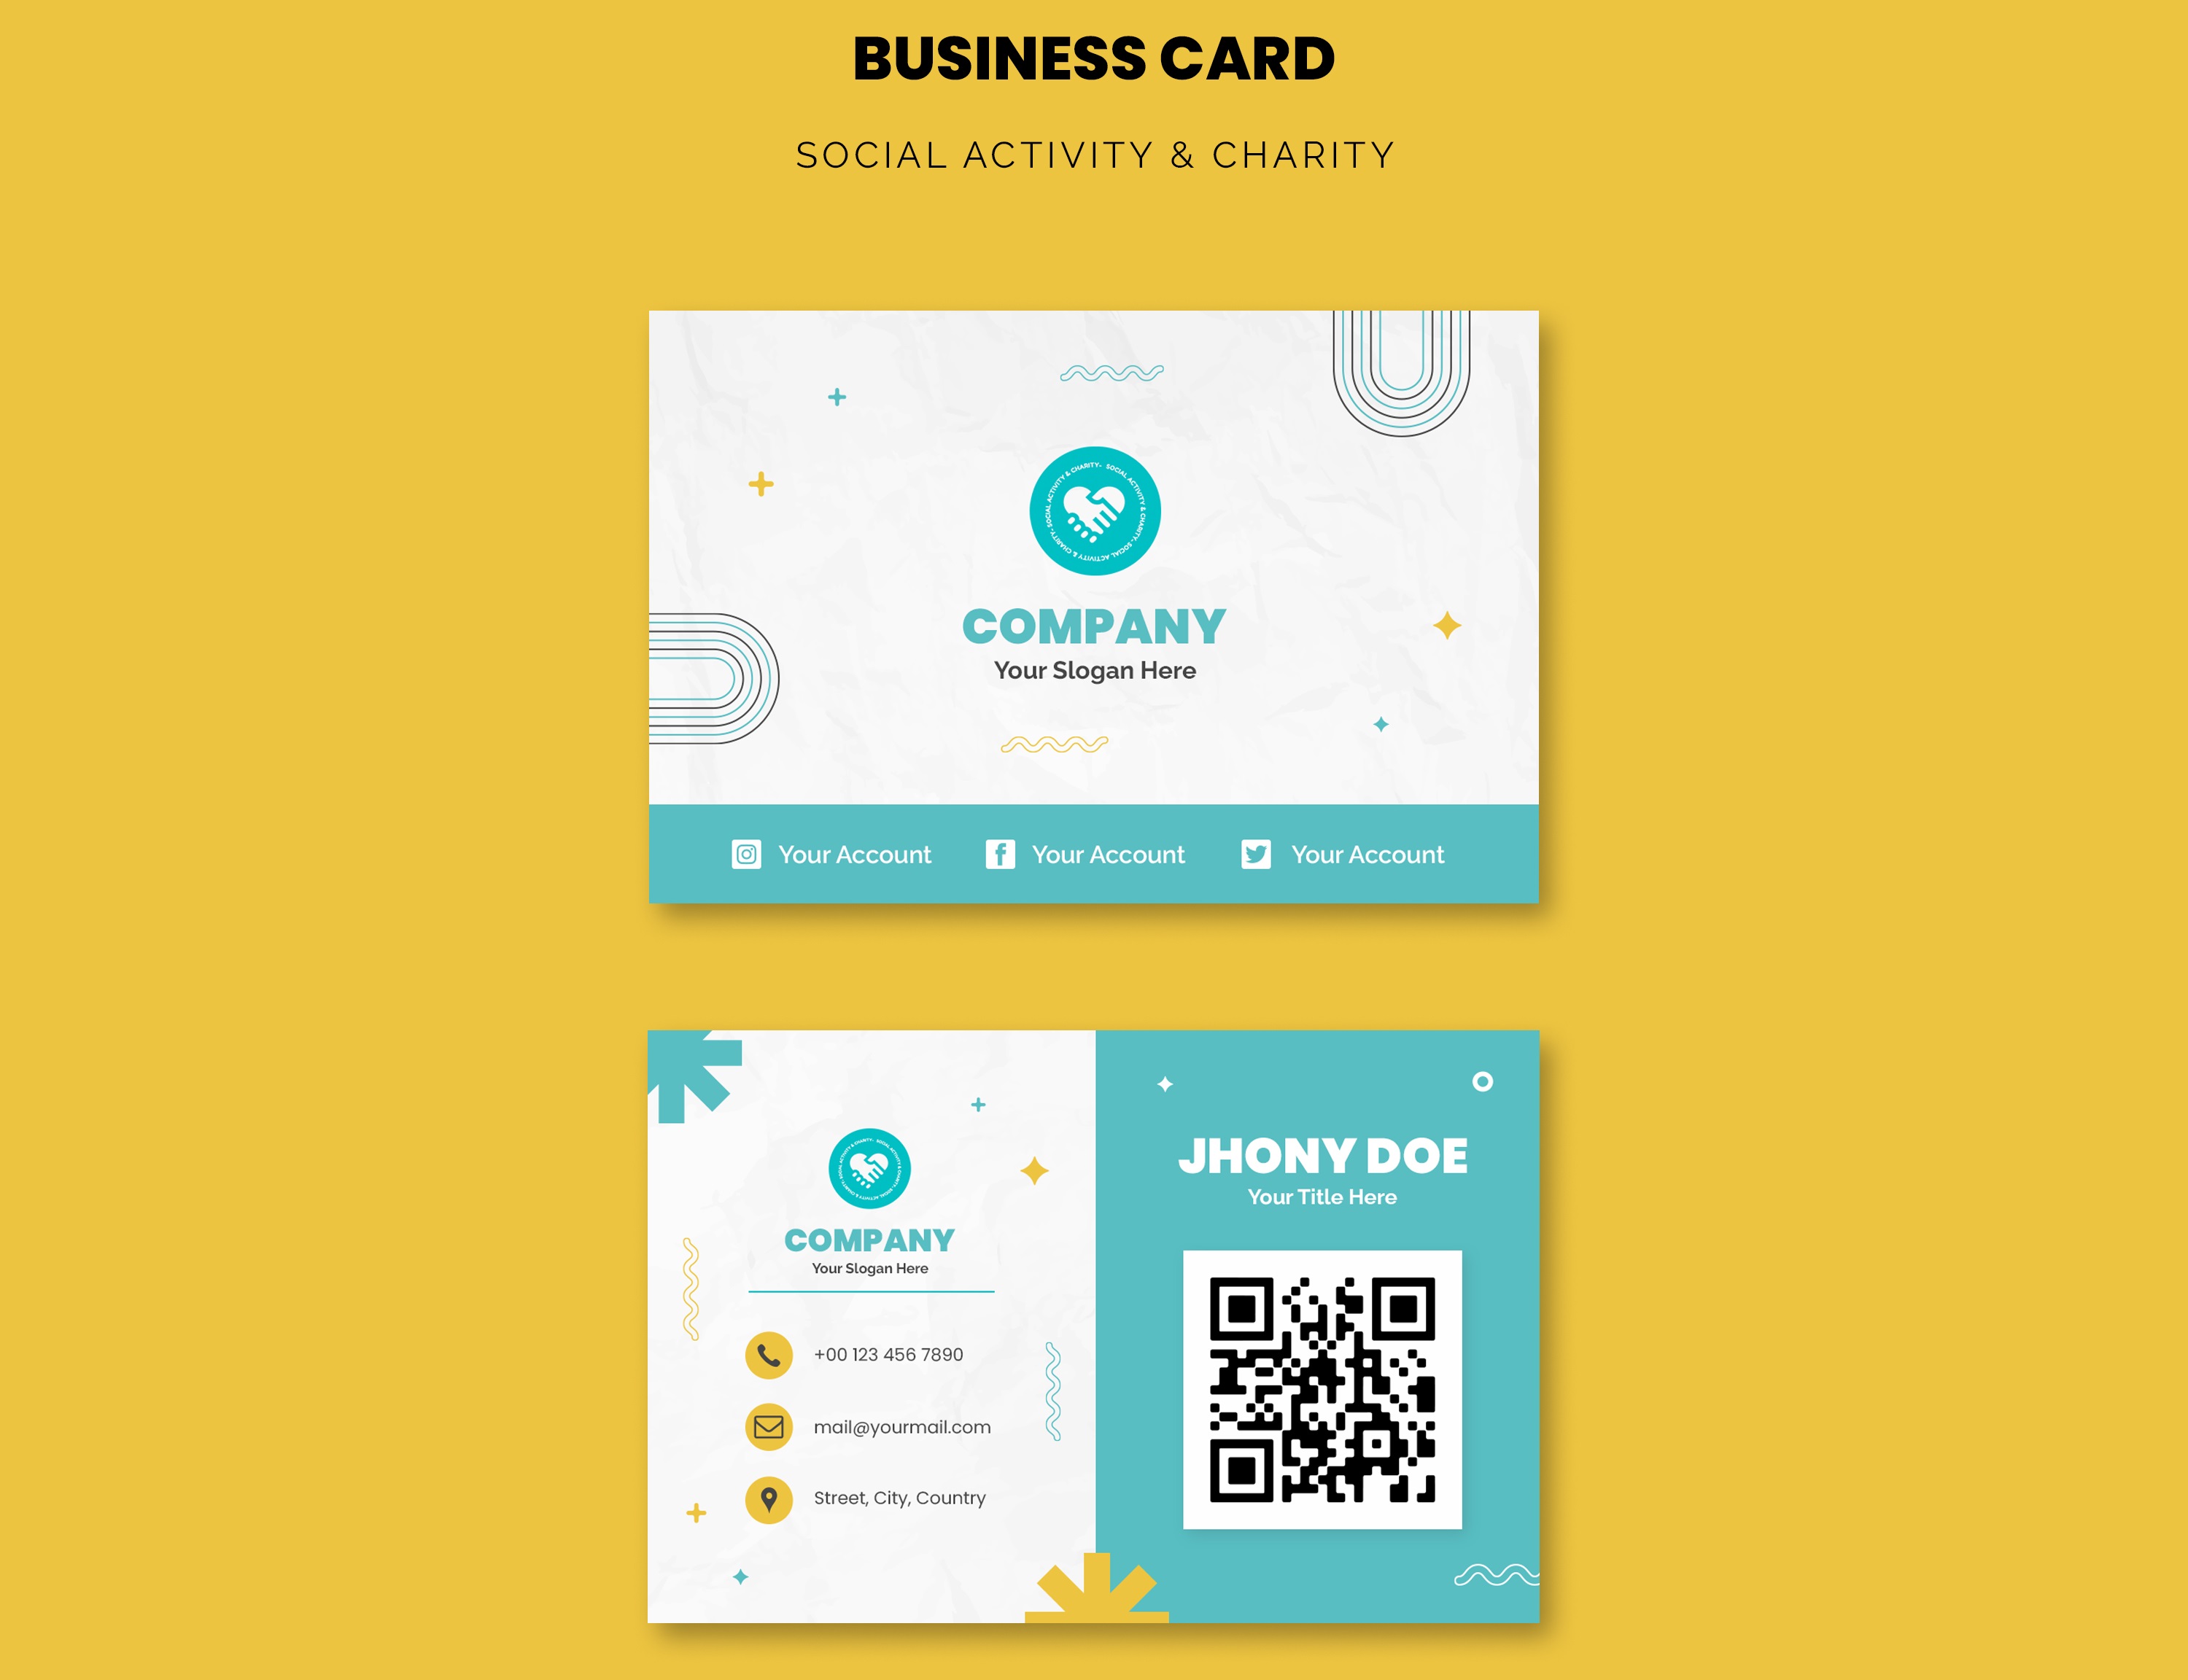 flat-design-social-activity-business-card-template-8989498